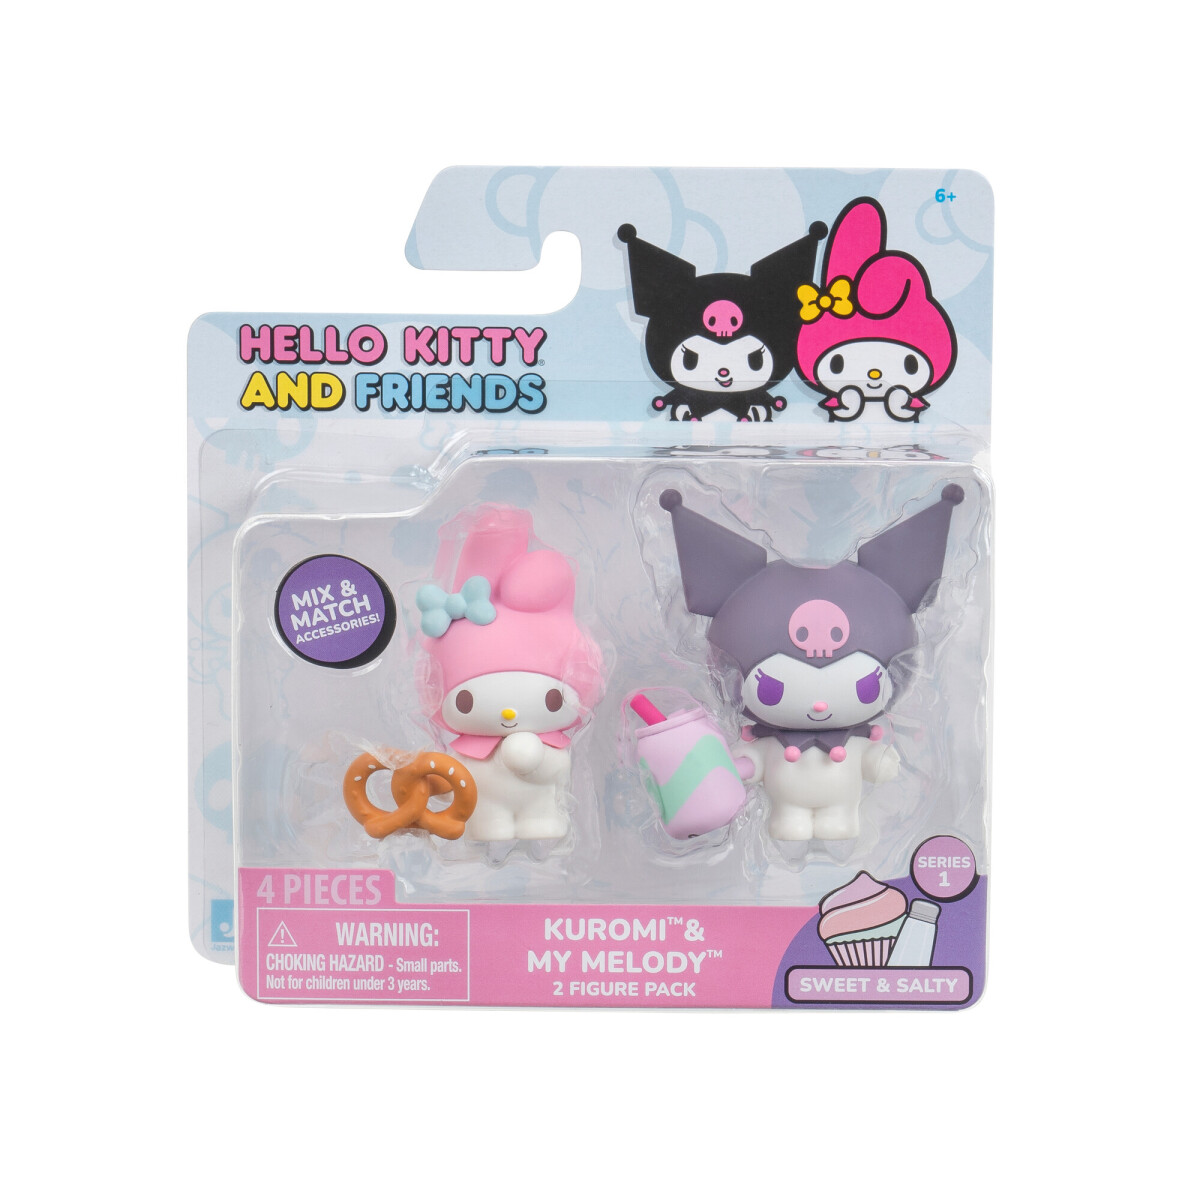 Set Figuras Hello Kitty Kuromi y My Melody - 001 